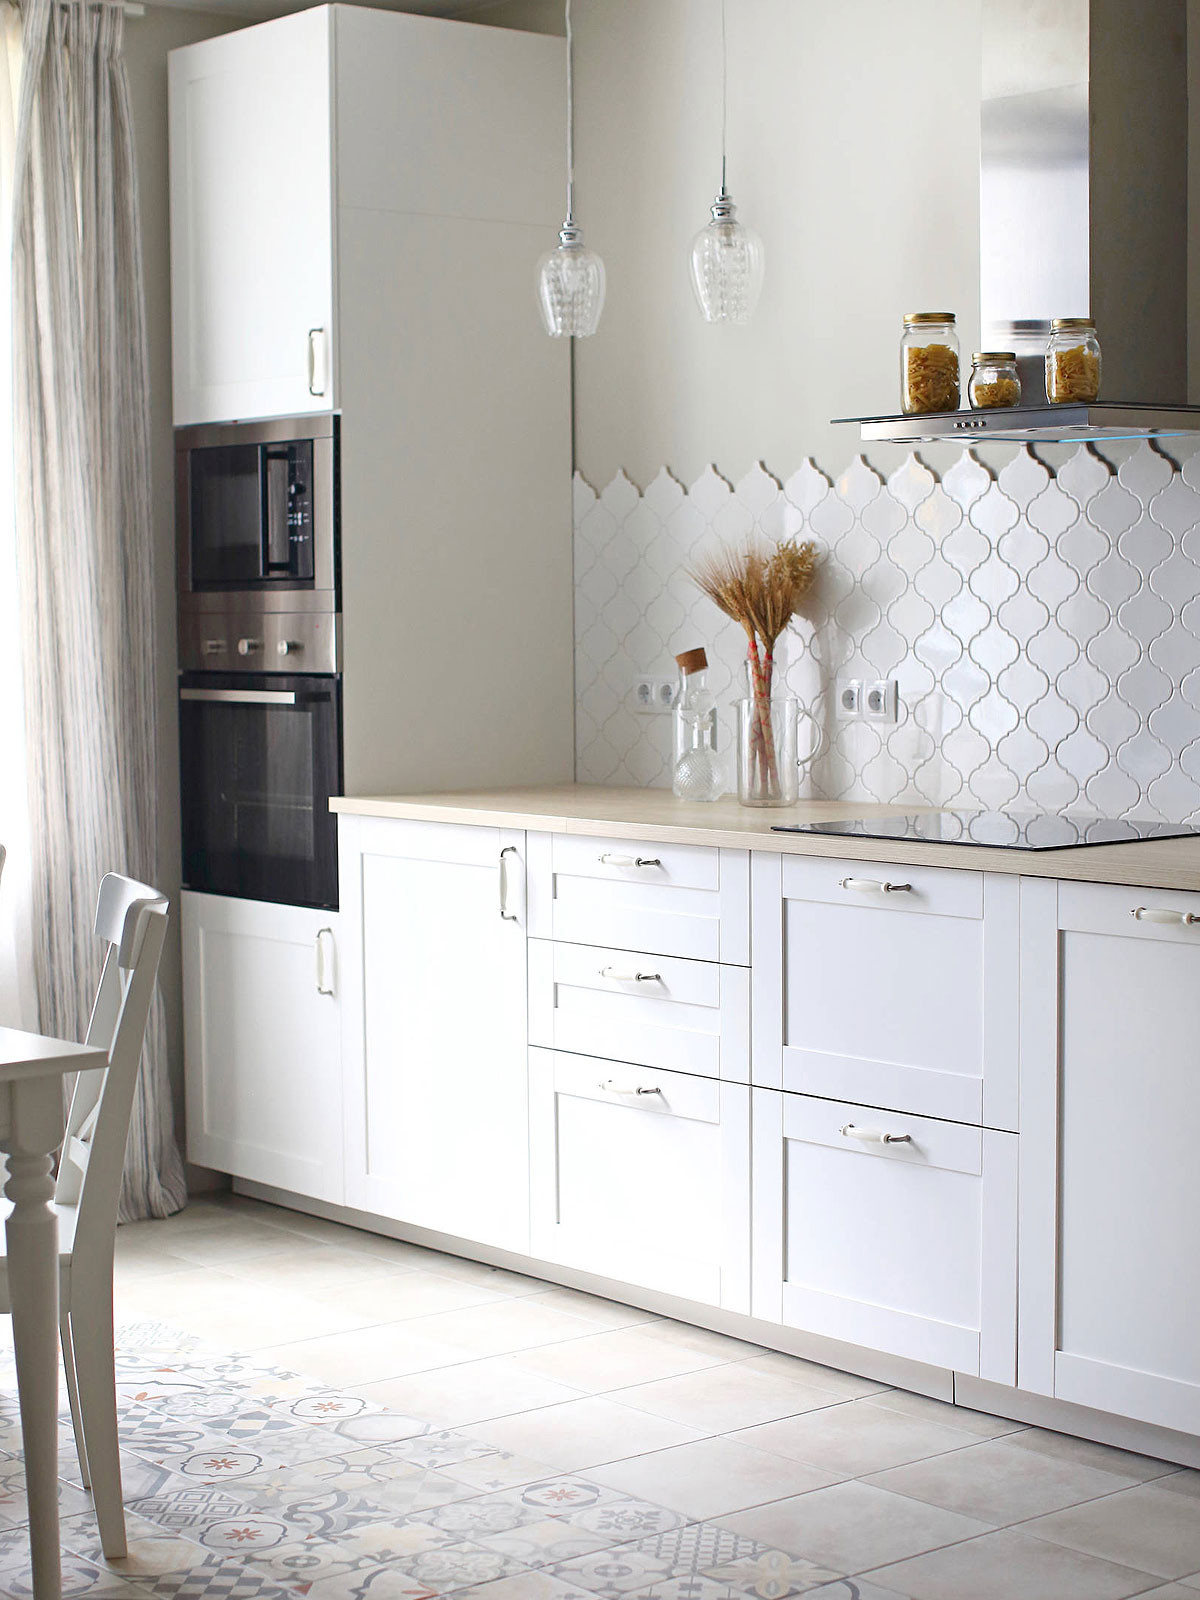 Arabesque Tile Kitchen Backsplash
 White Glazed Porcelain Arabesque Backsplash Tile